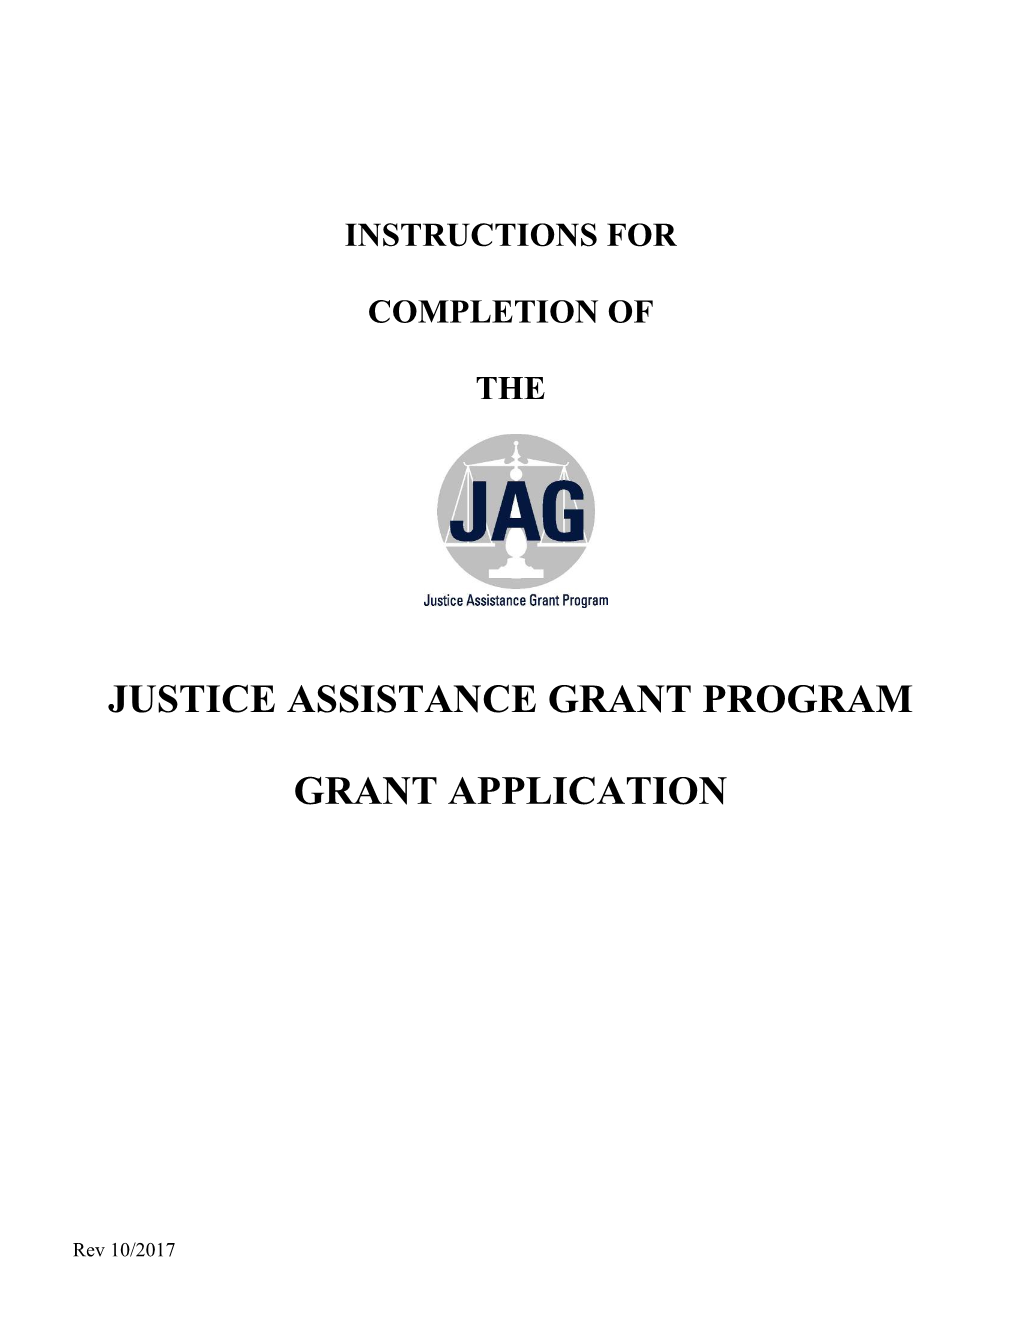 Justice Assistance Grant Program